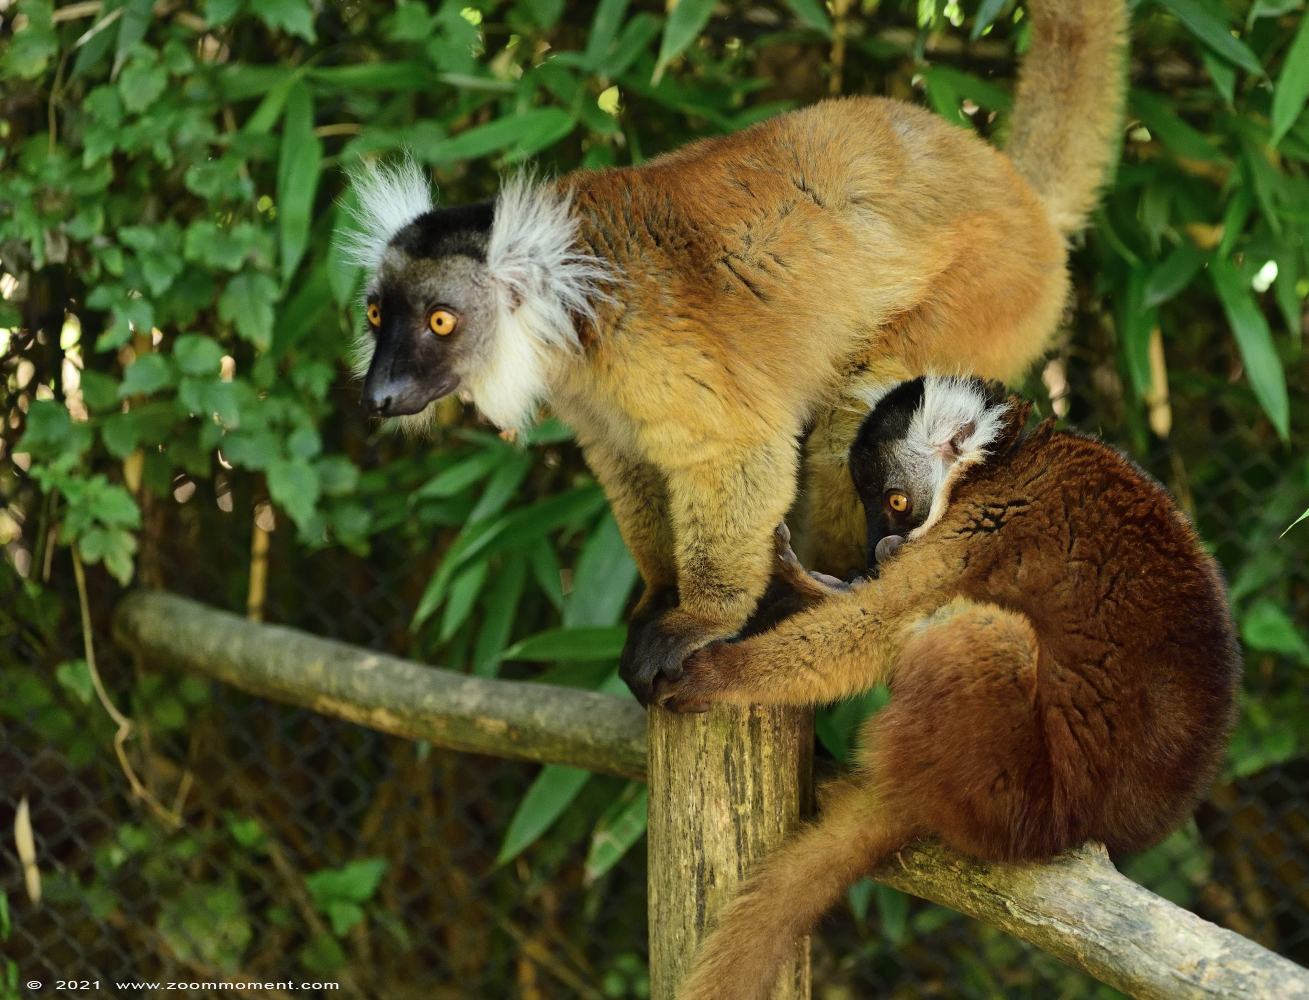 moormaki ( Eulemur macaco ) black lemur
Keywords: Planckendael Belgium moormaki Eulemur macaco black lemur